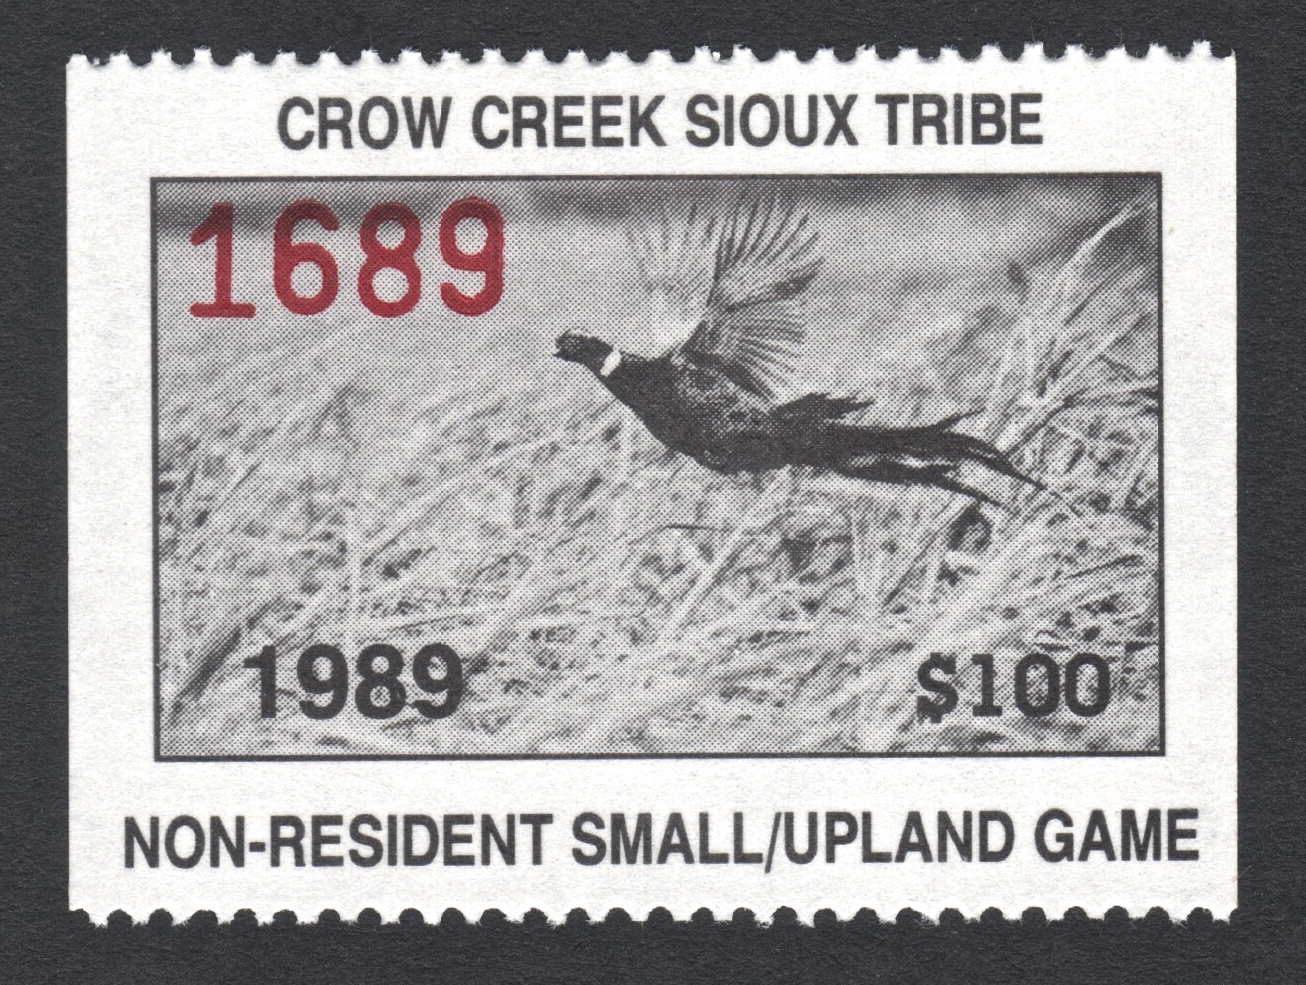 1989 Crow Creek NR Small/Upland Game